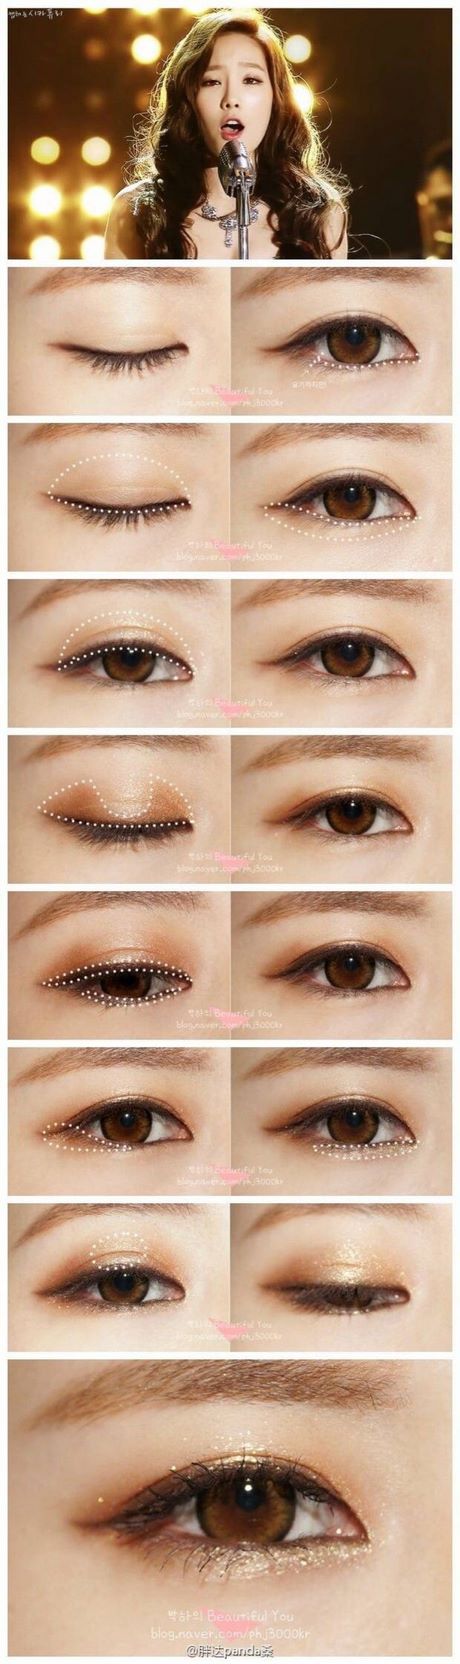 makeup-beauty-tutorial-88_10 Make-up beauty tutorial